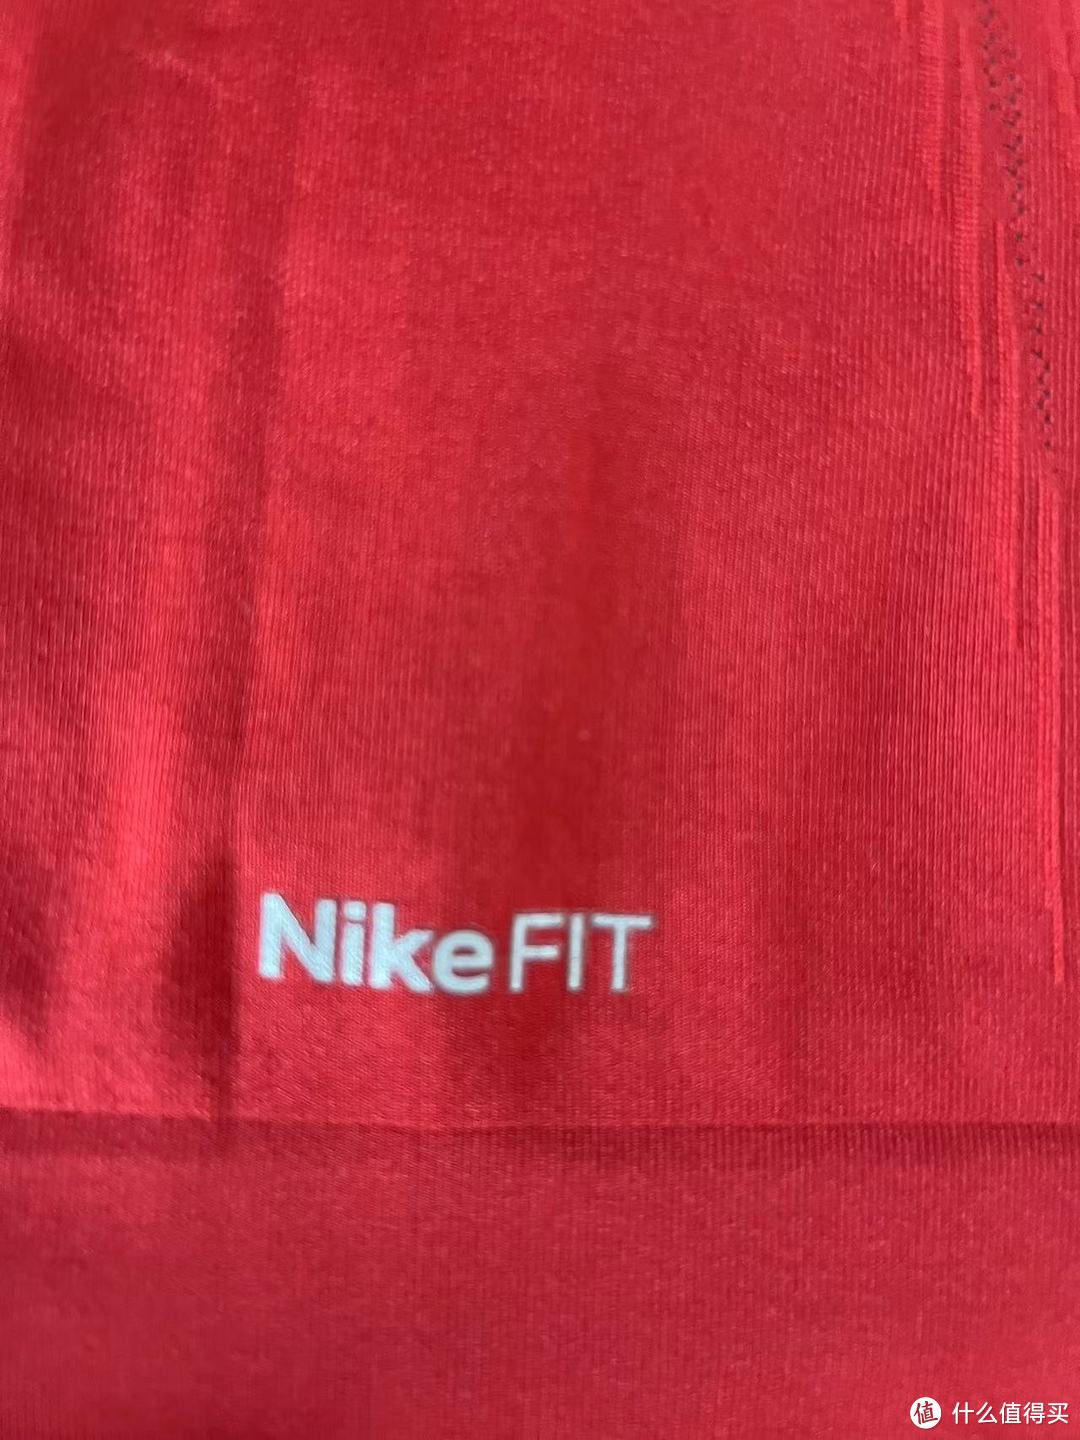 NikeFIT面料科技标，作为早期的面料标，起到的也就是基本的透气，排汗，快干功能，至少是要胜过纯棉面料的。